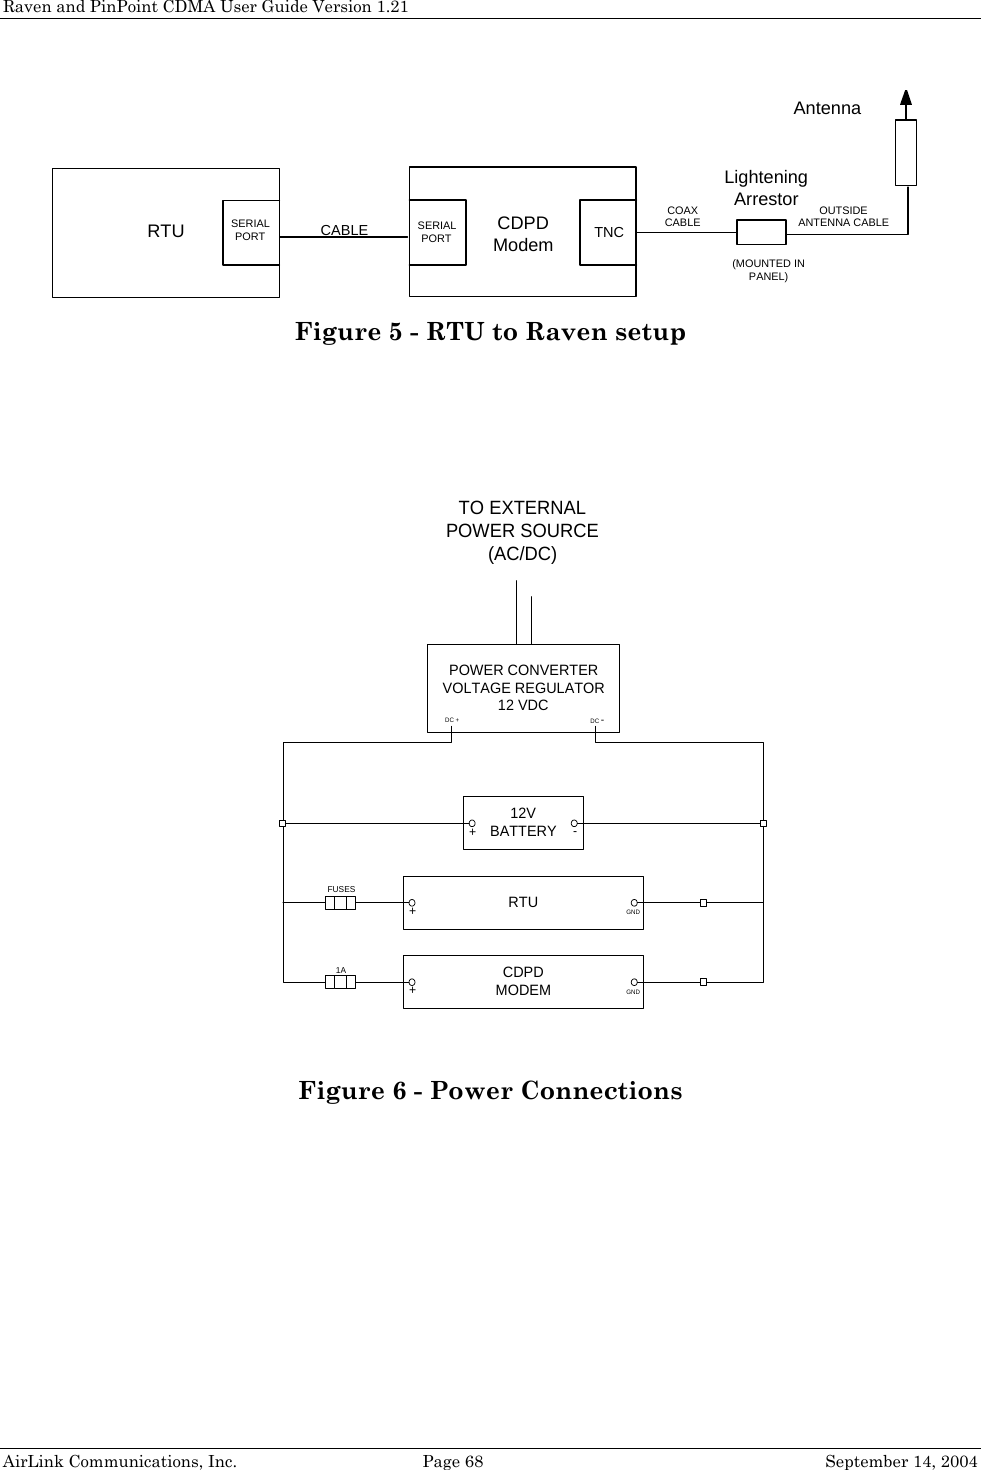 Raven and PinPoint CDMA User Guide Version 1.21 COAXCABLELighteningArrestor(MOUNTED INPANEL)AntennaOUTSIDEANTENNA CABLERTU SERIALPORT SERIALPORT TNCCDPDModemCABLEFigure 5 - RTU to Raven setup   Figure 6 - Power Connections  TO EXTERNALPOWER SOURCE(AC/DC)POWER CONVERTERVOLTAGE REGULATOR12 VDC12VBATTERYRTUCDPDMODEMFUSES1ADC + DC -++GNDGND+-AirLink Communications, Inc.  Page 68  September 14, 2004 